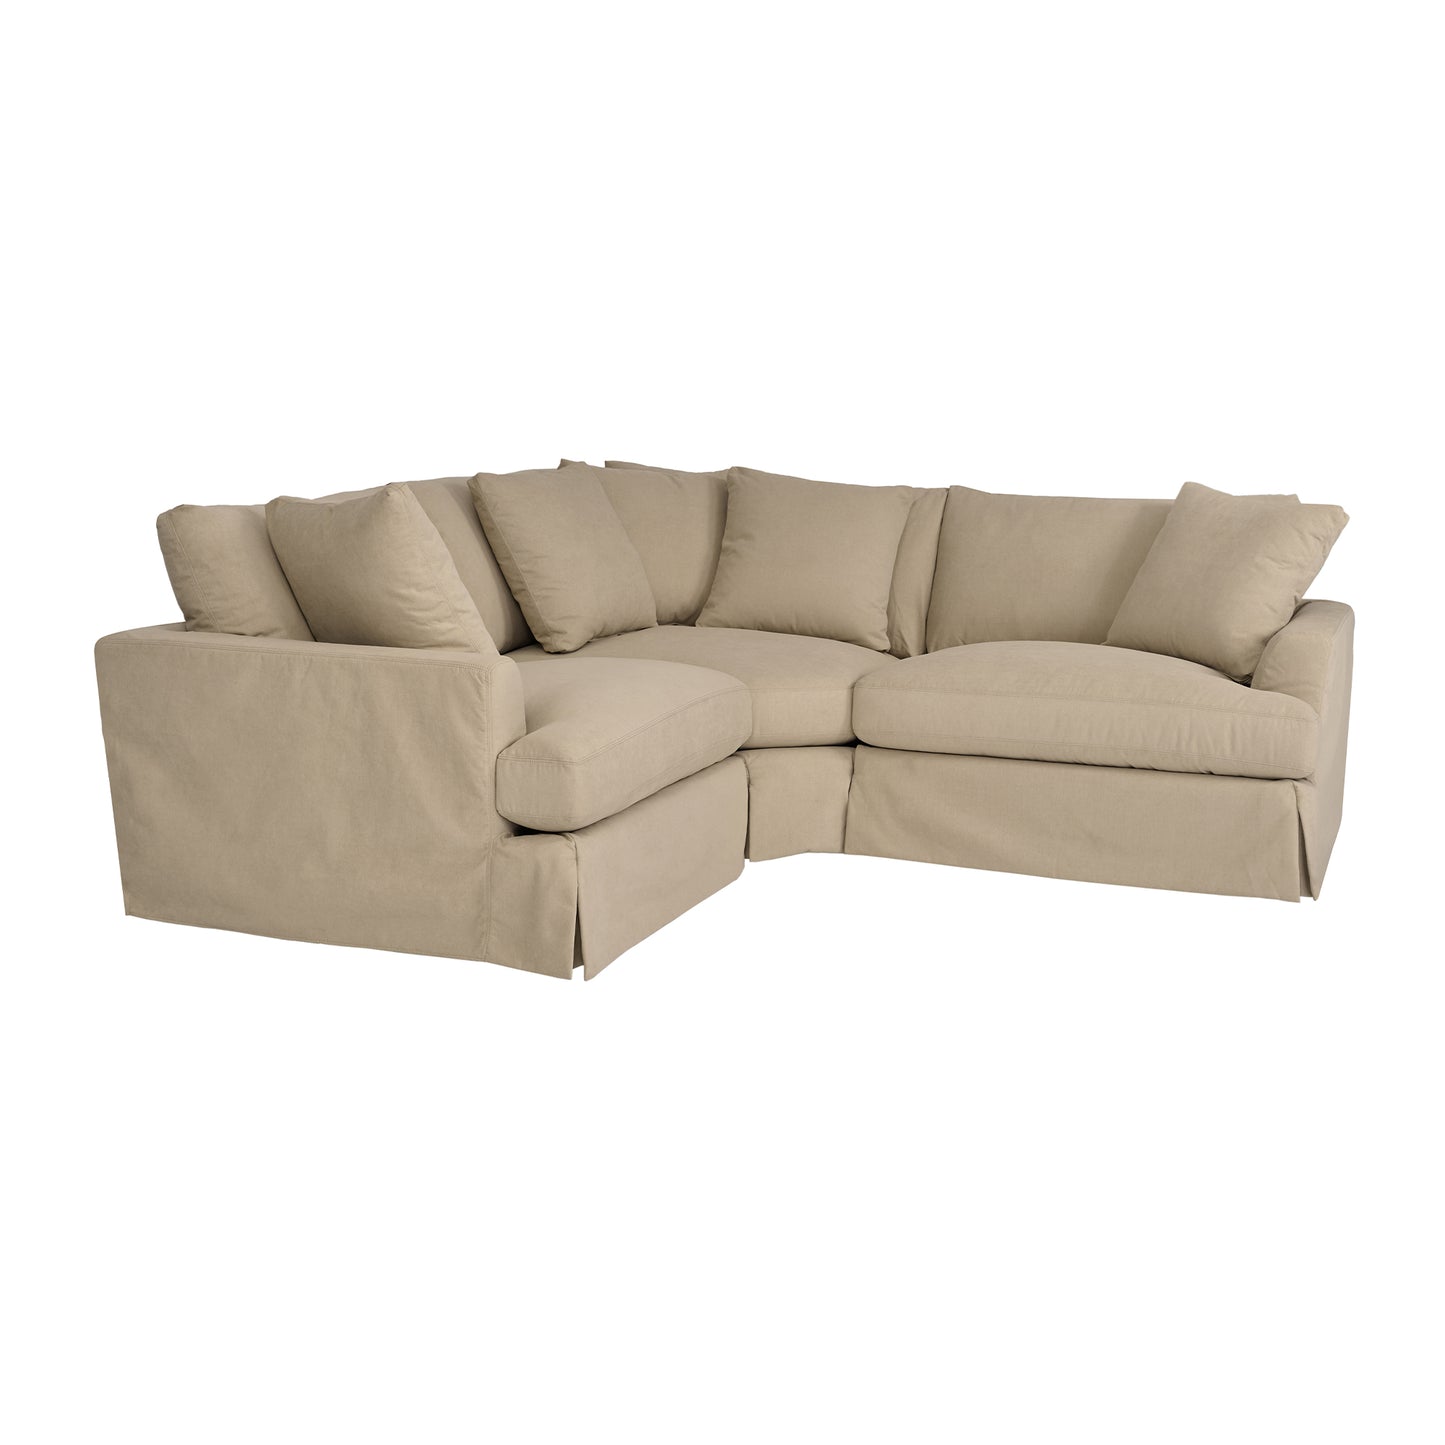 Ciara Upholstered 3 Piece Sectional Sofa in Sahara Brown